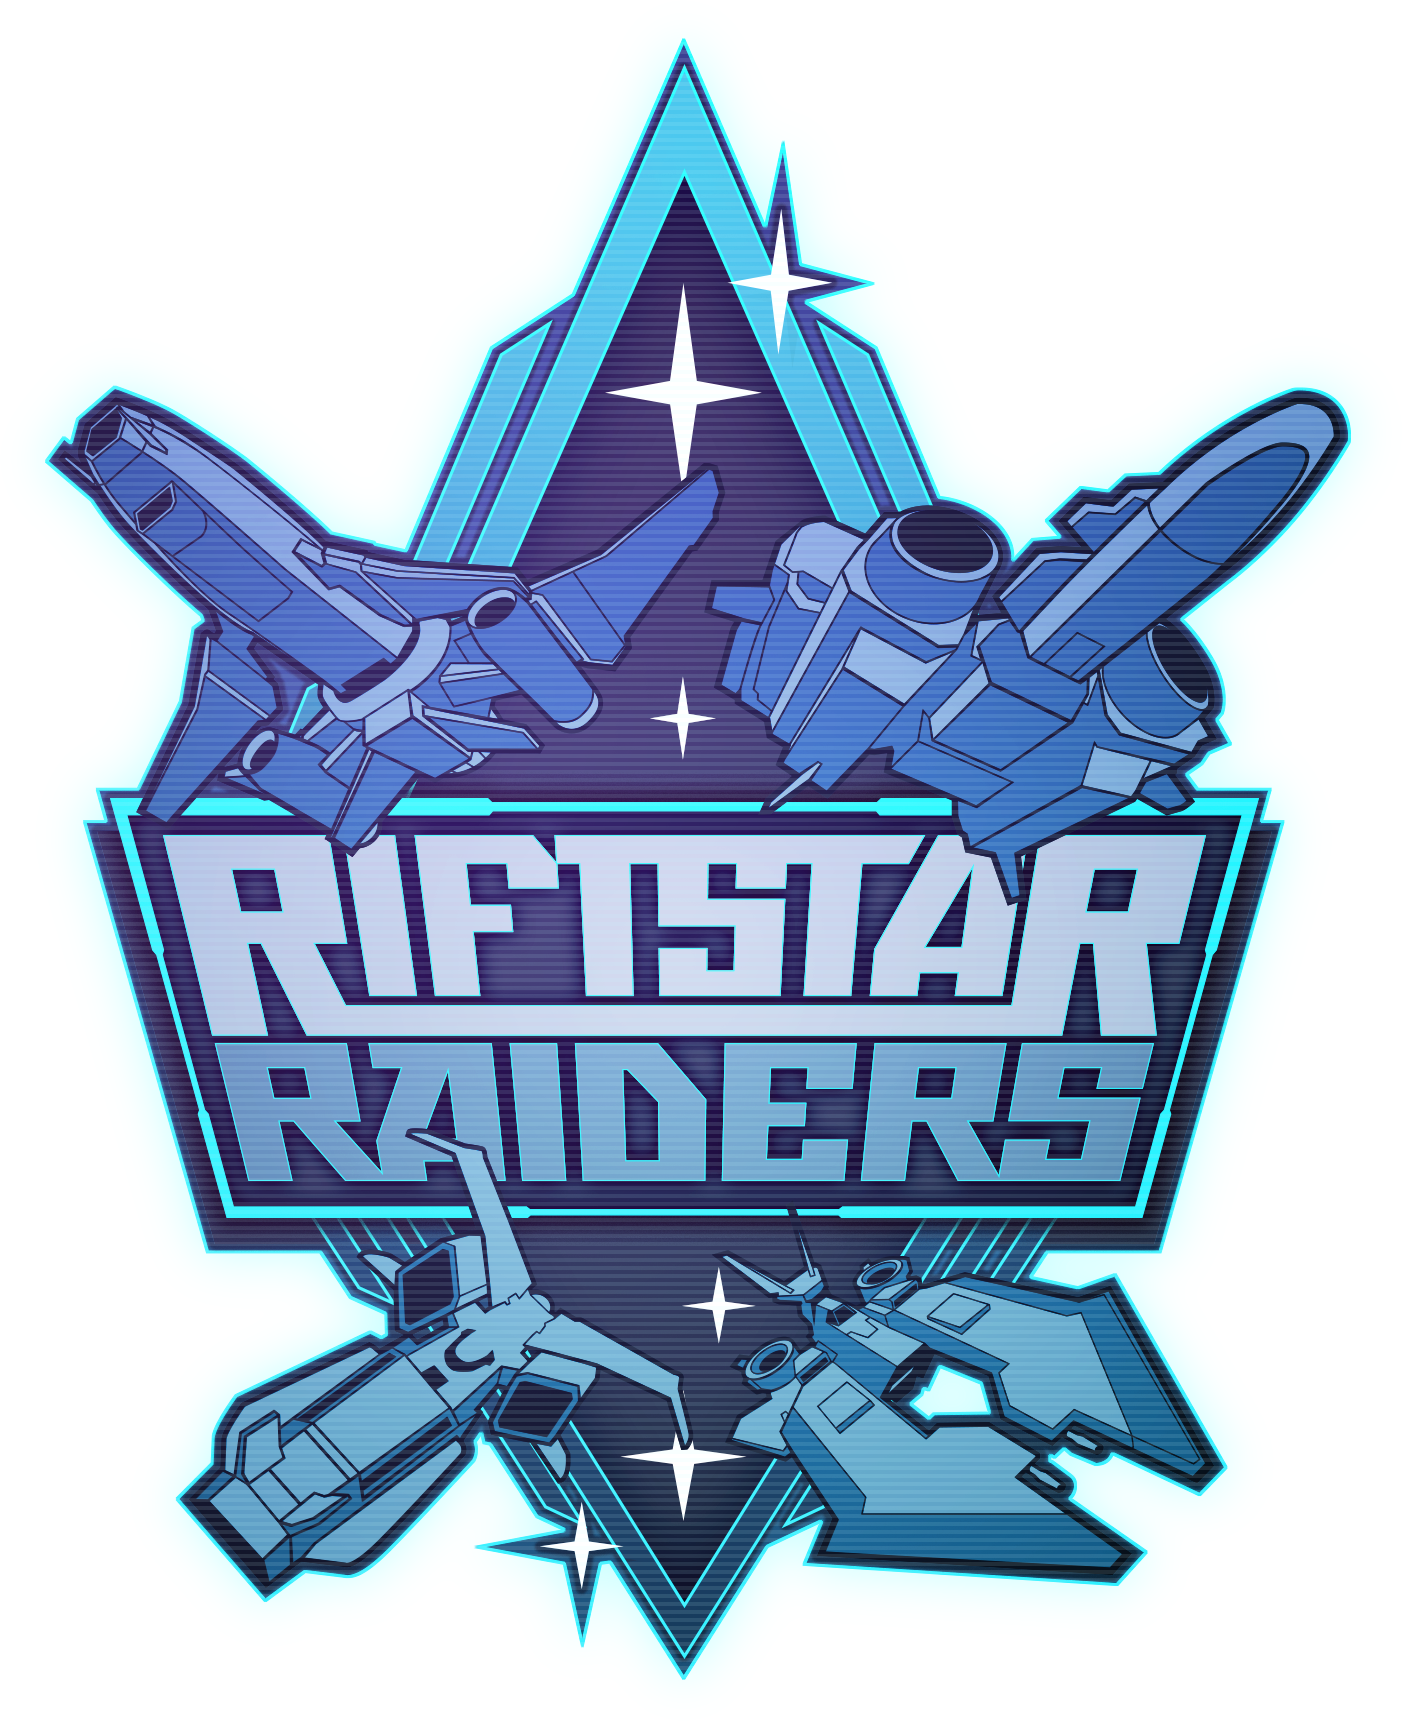 Riftstar Raiders Logo - Riftstar Raiders (1402x1721), Png Download